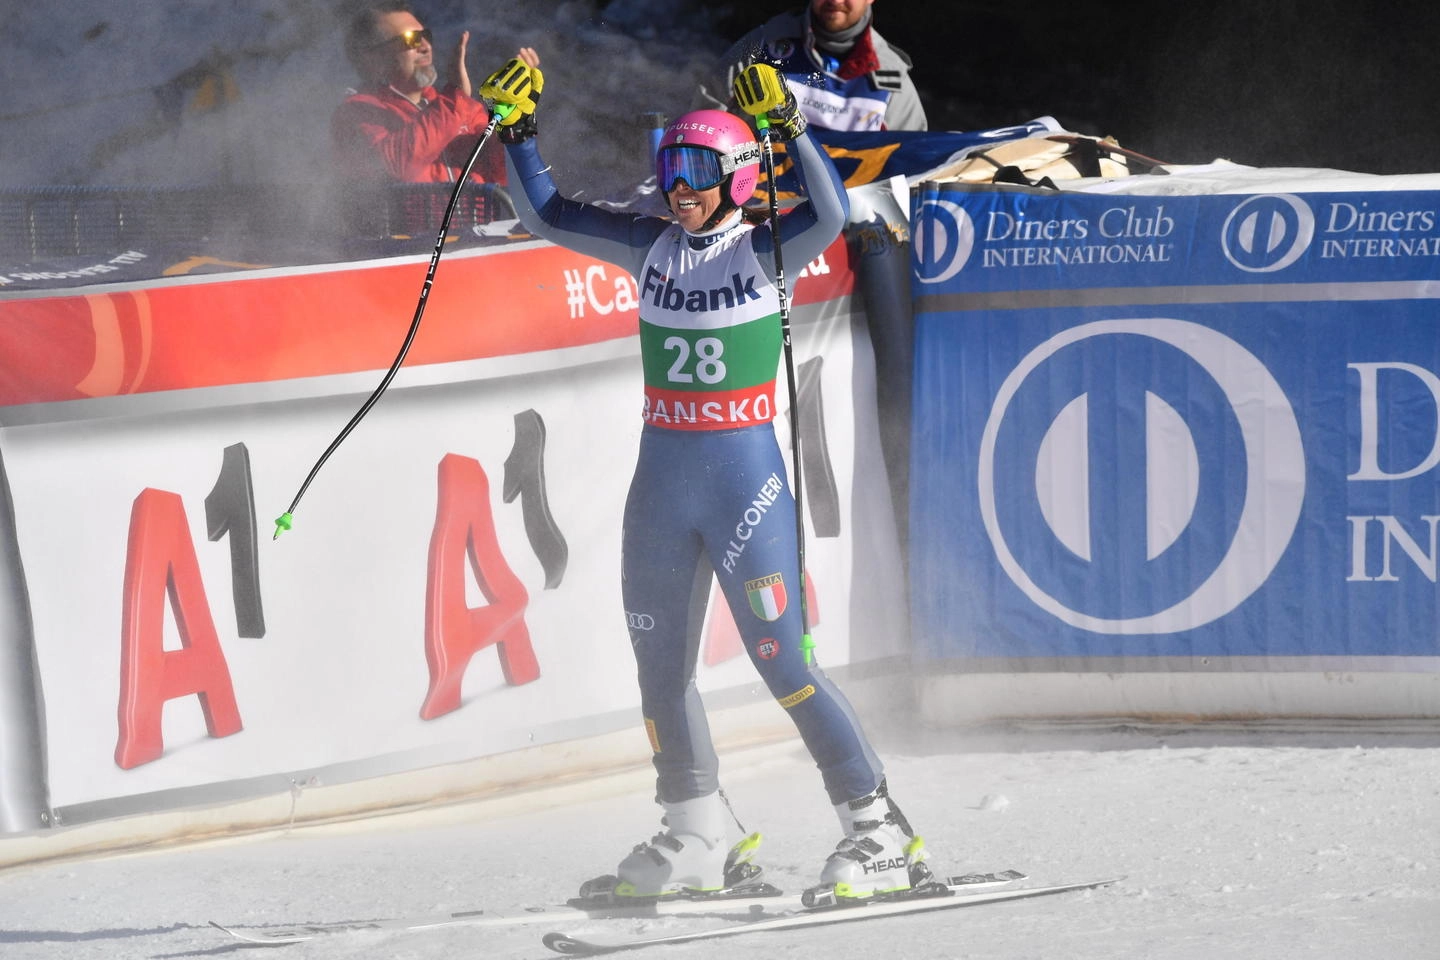 epa08162413 Elena Curtoni of Italy reacts in the finish area during the Women's Downhill race at the FIS Alpine Skiing World Cup in Bansko, Bulgaria on 25 January 2020.  EPA/GEORGI LICOVSKI